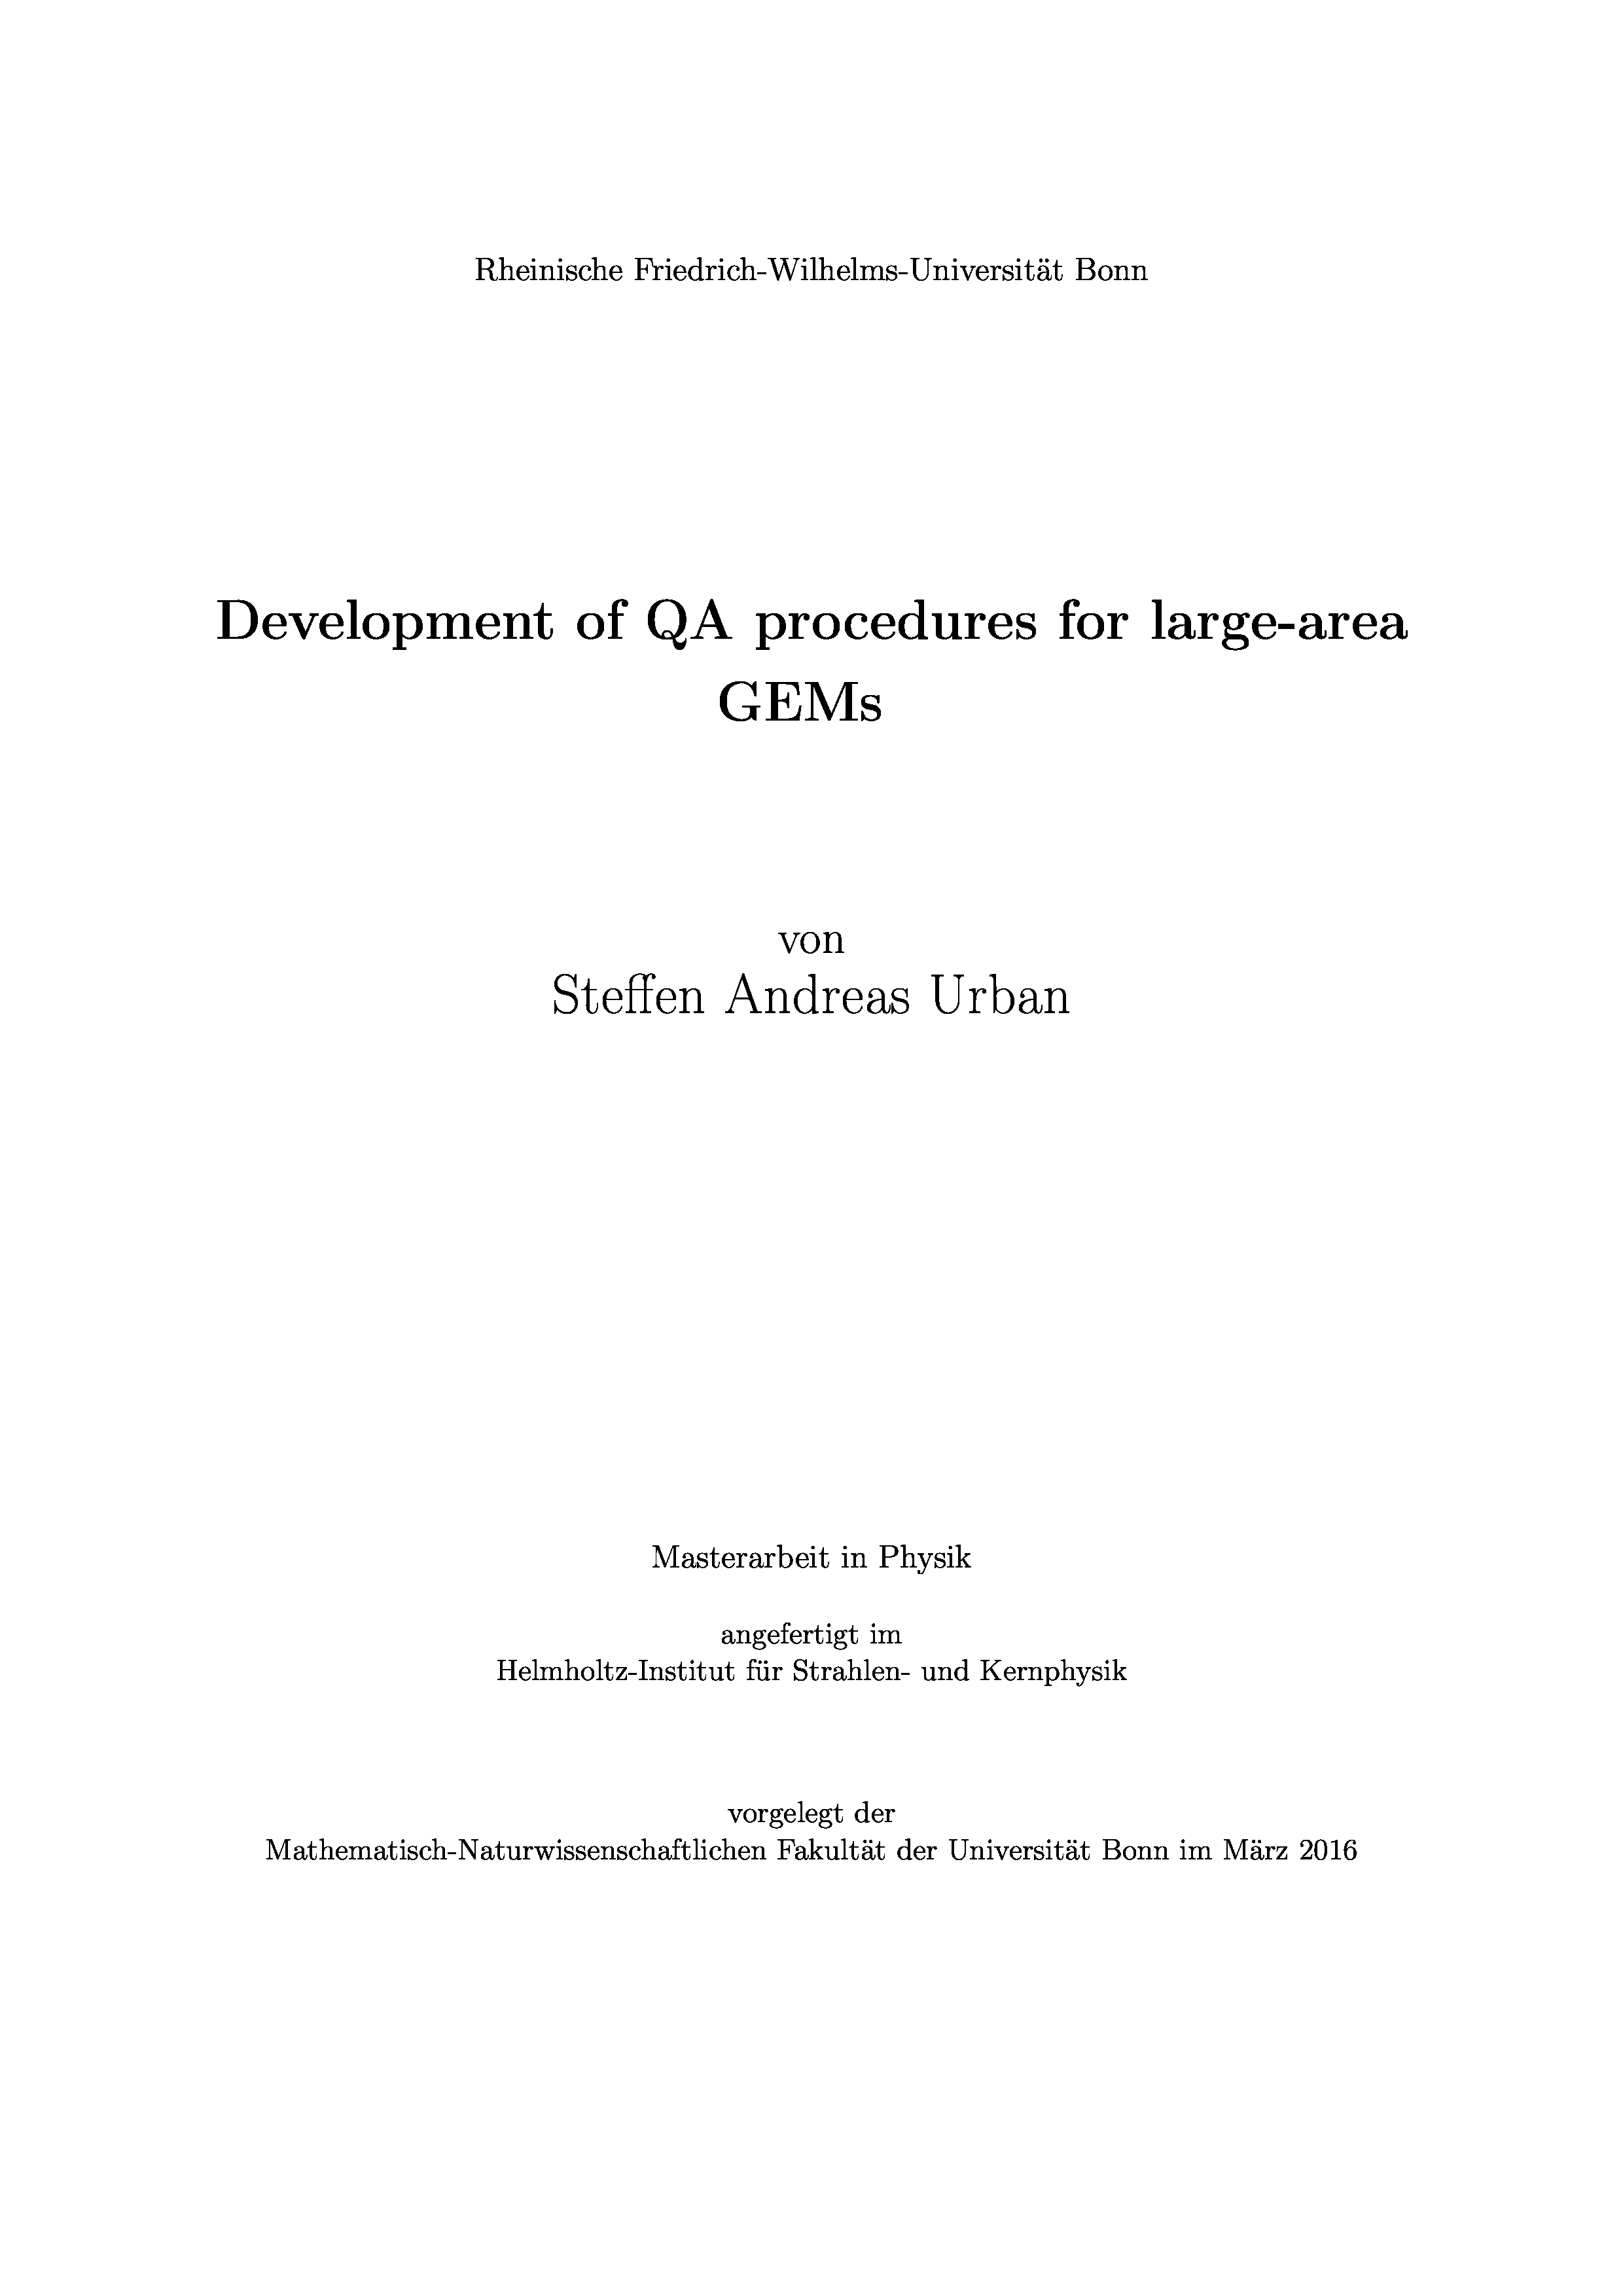 Development of QA procedures for large-area GEM